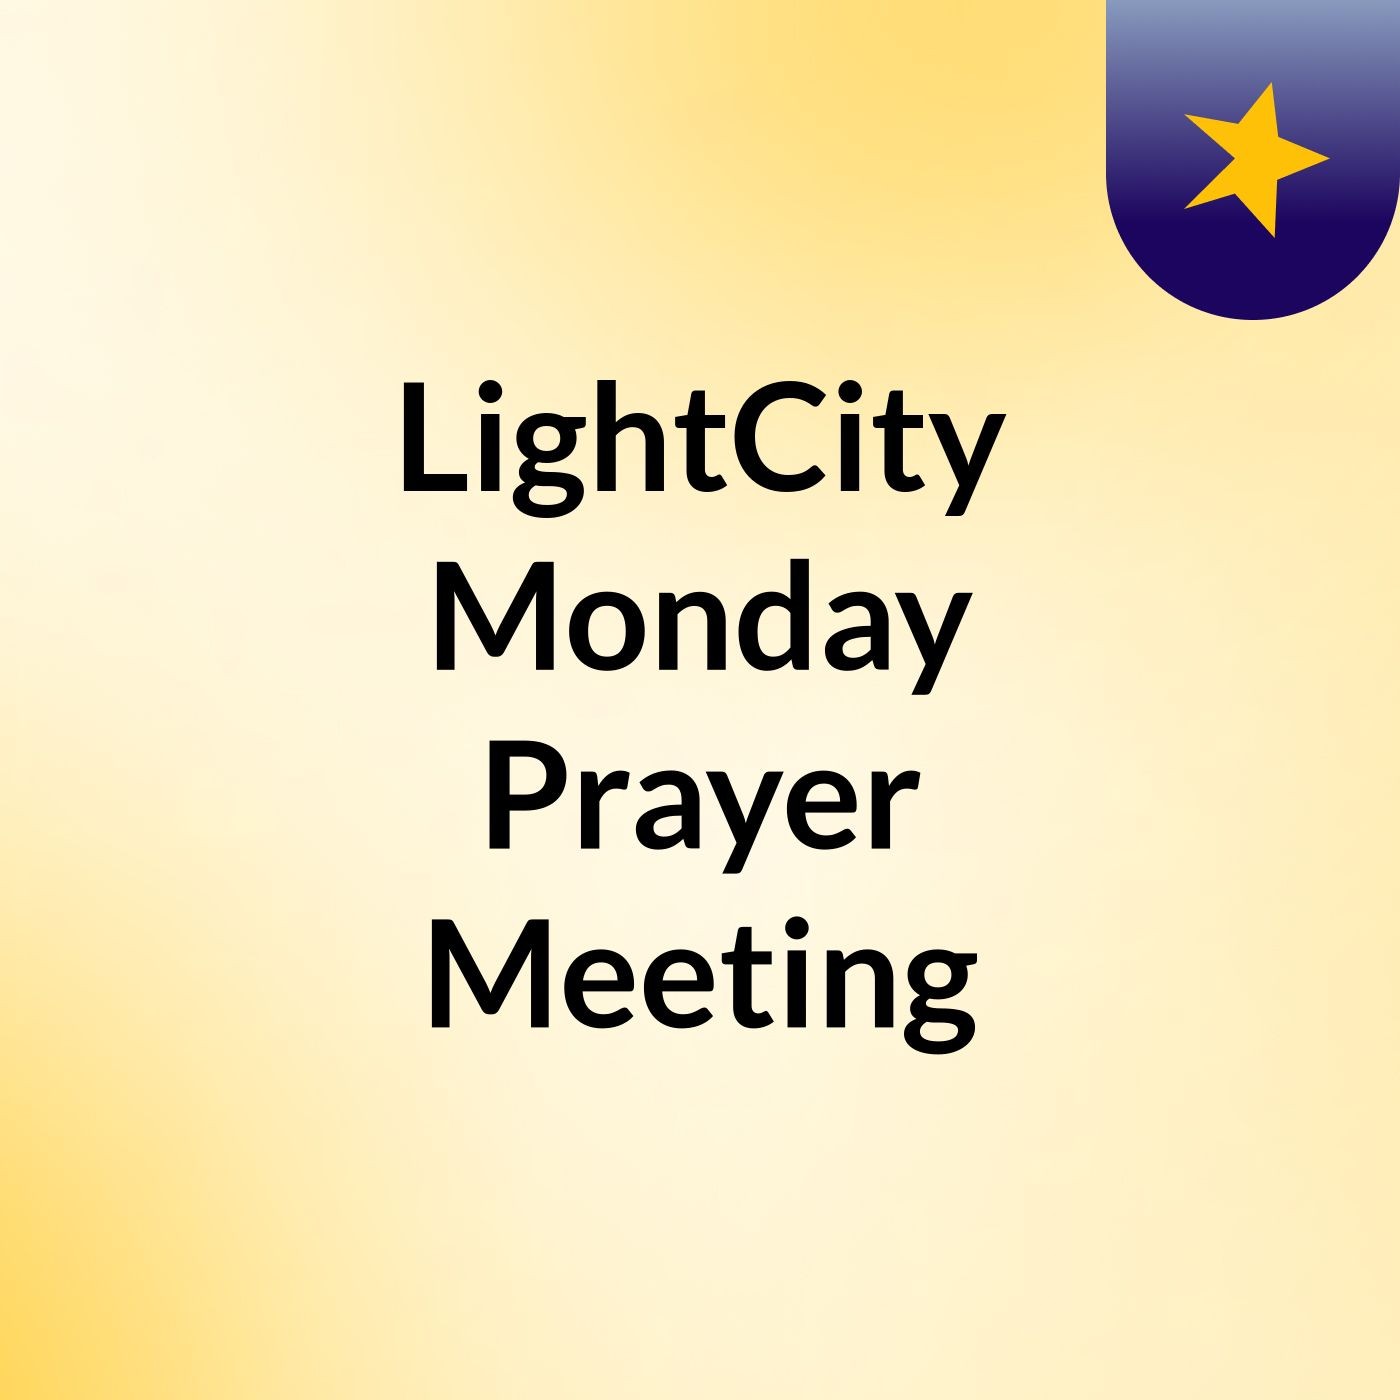 LightCity Monday Prayer Meeting